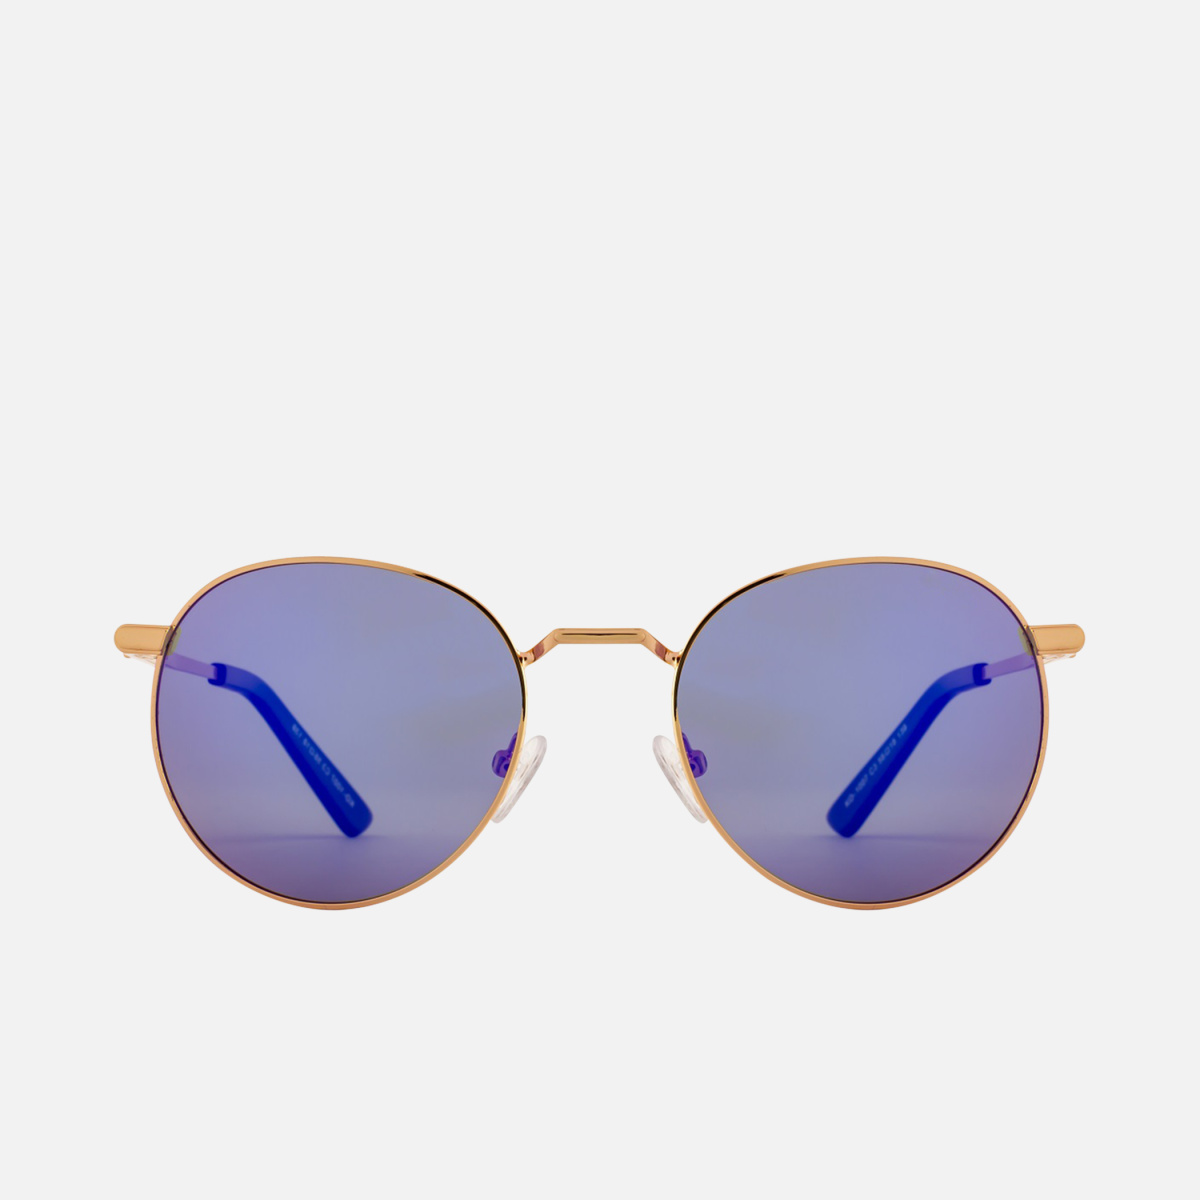 KOSCH ELEMENTE Women UV-Protected Round Sunglasses - 1007-C3